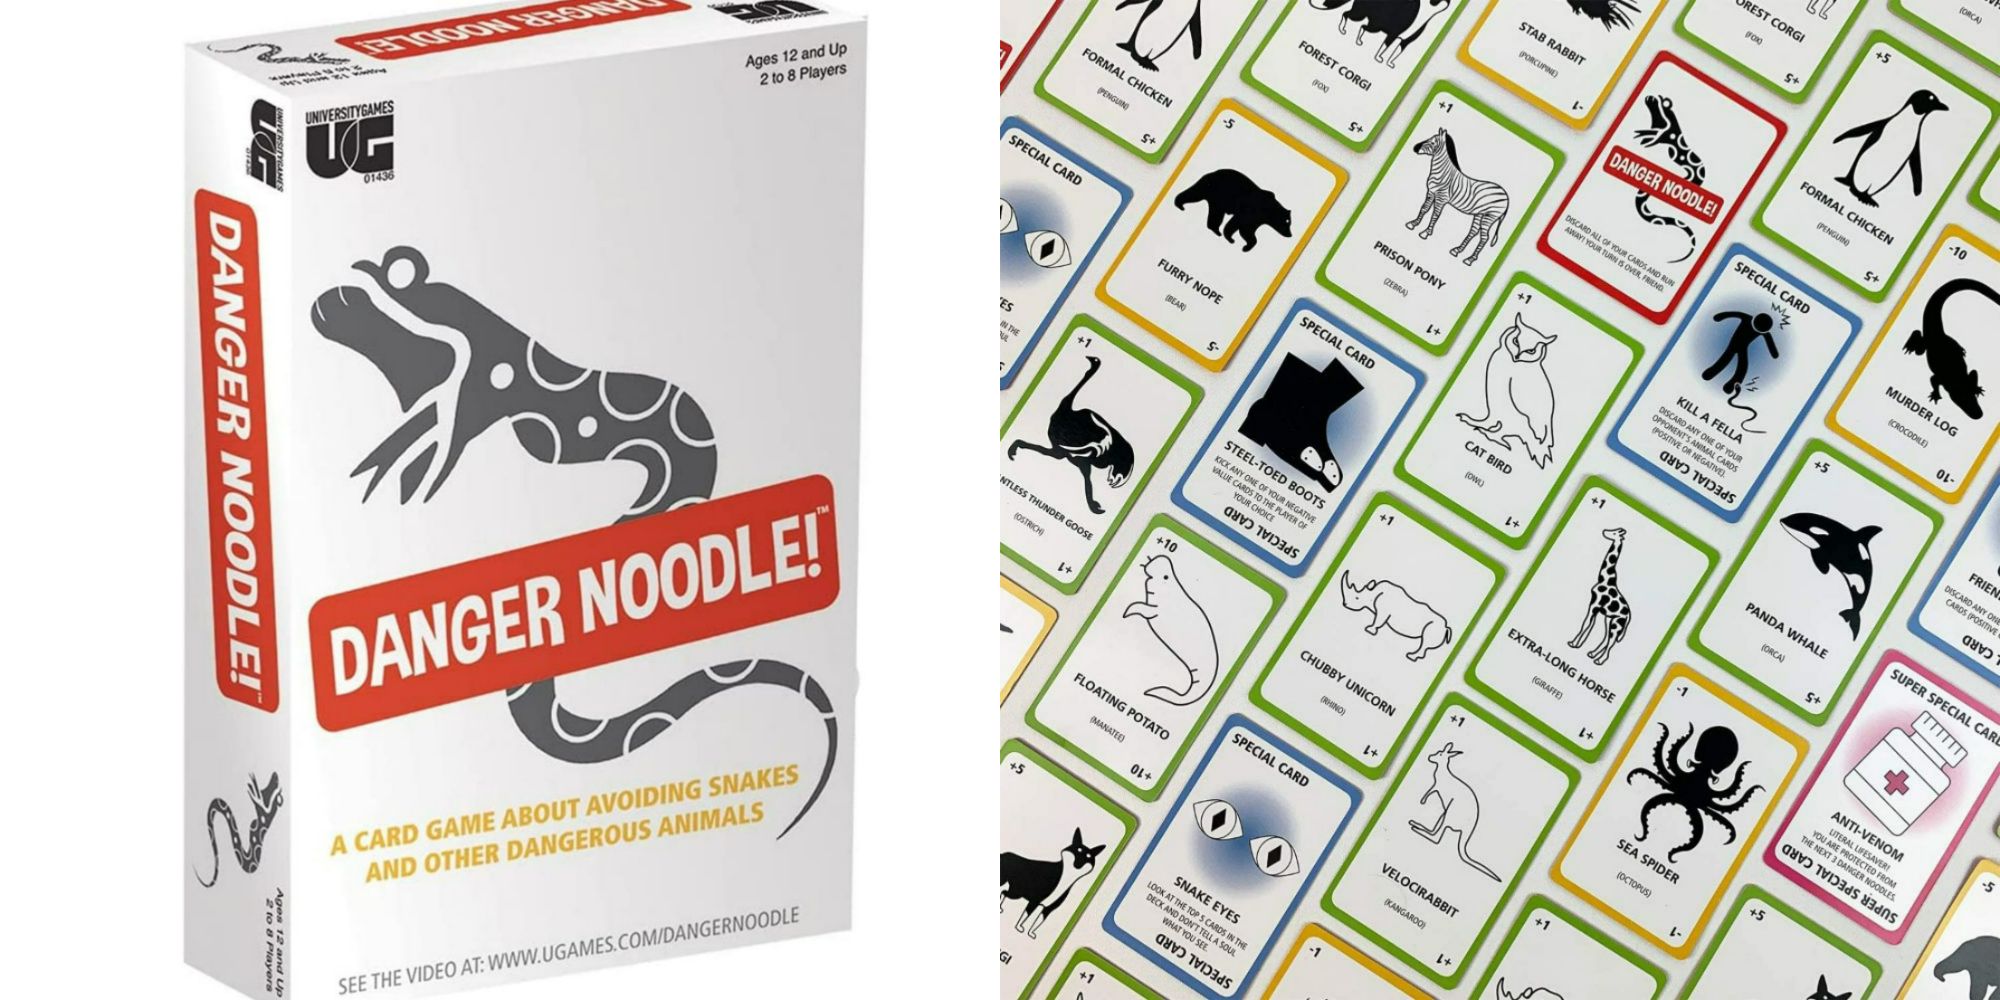 Split image of Danger Noodle box and cards.